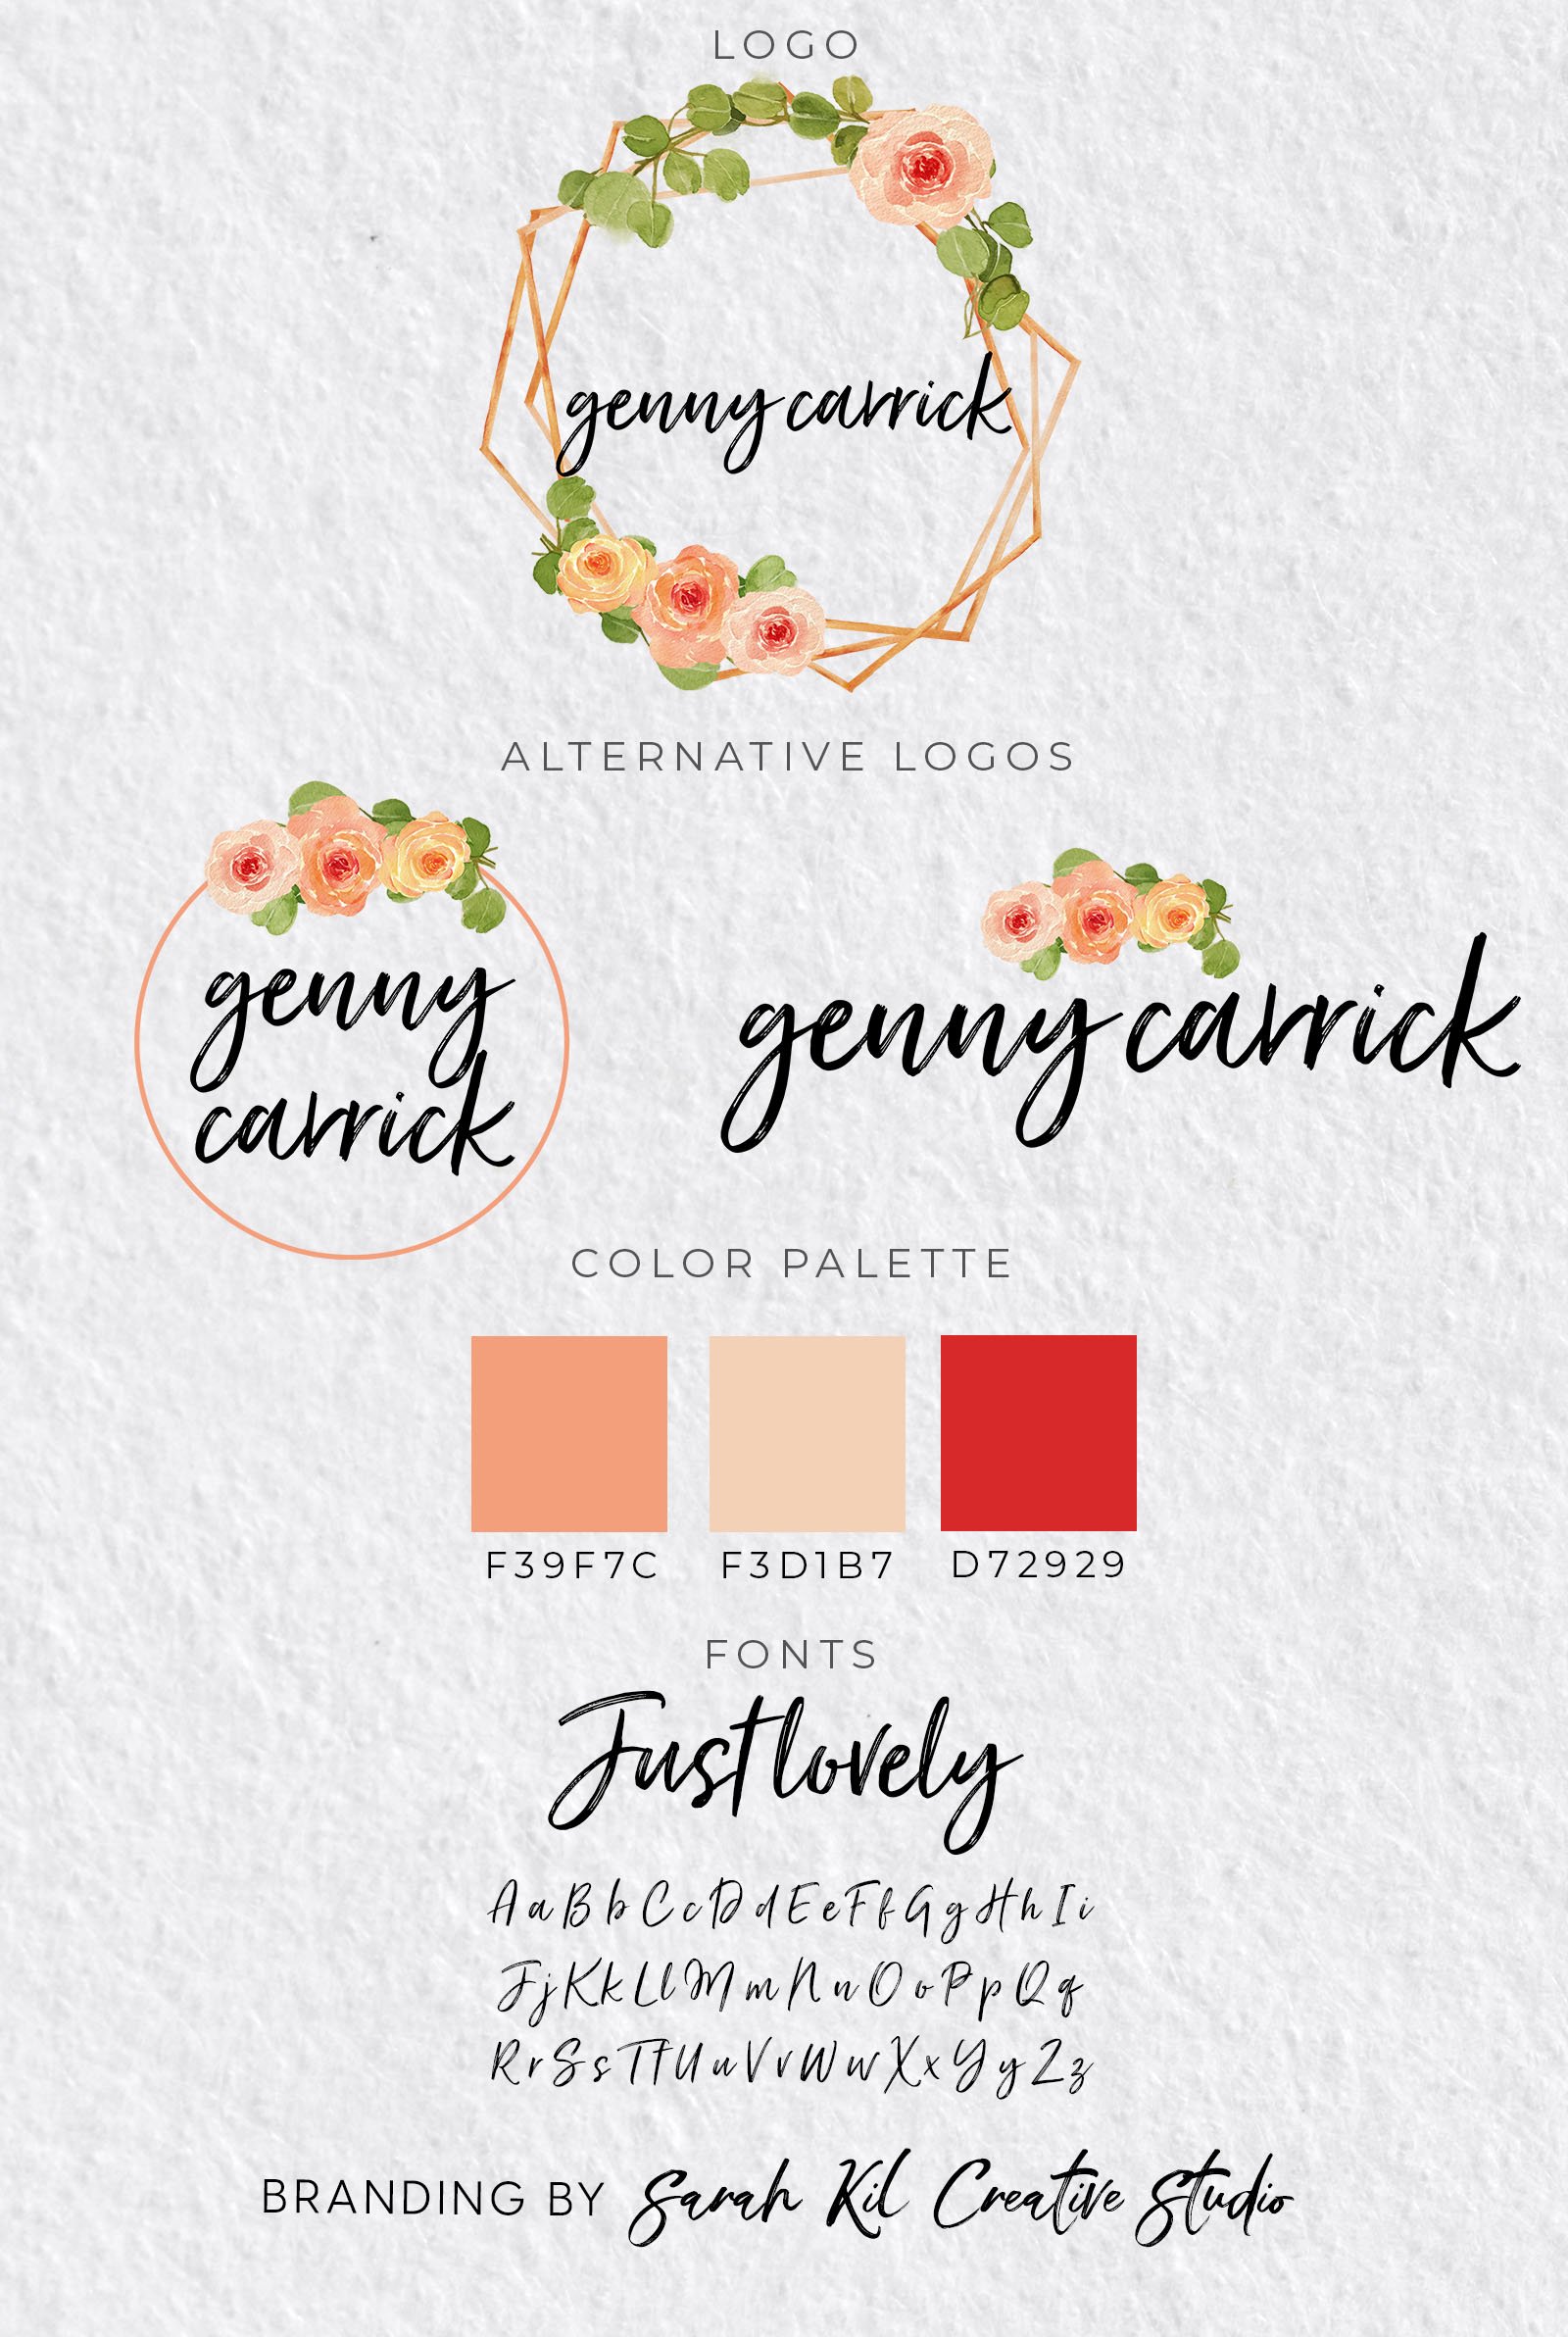 genny carrick branding kit template.jpg